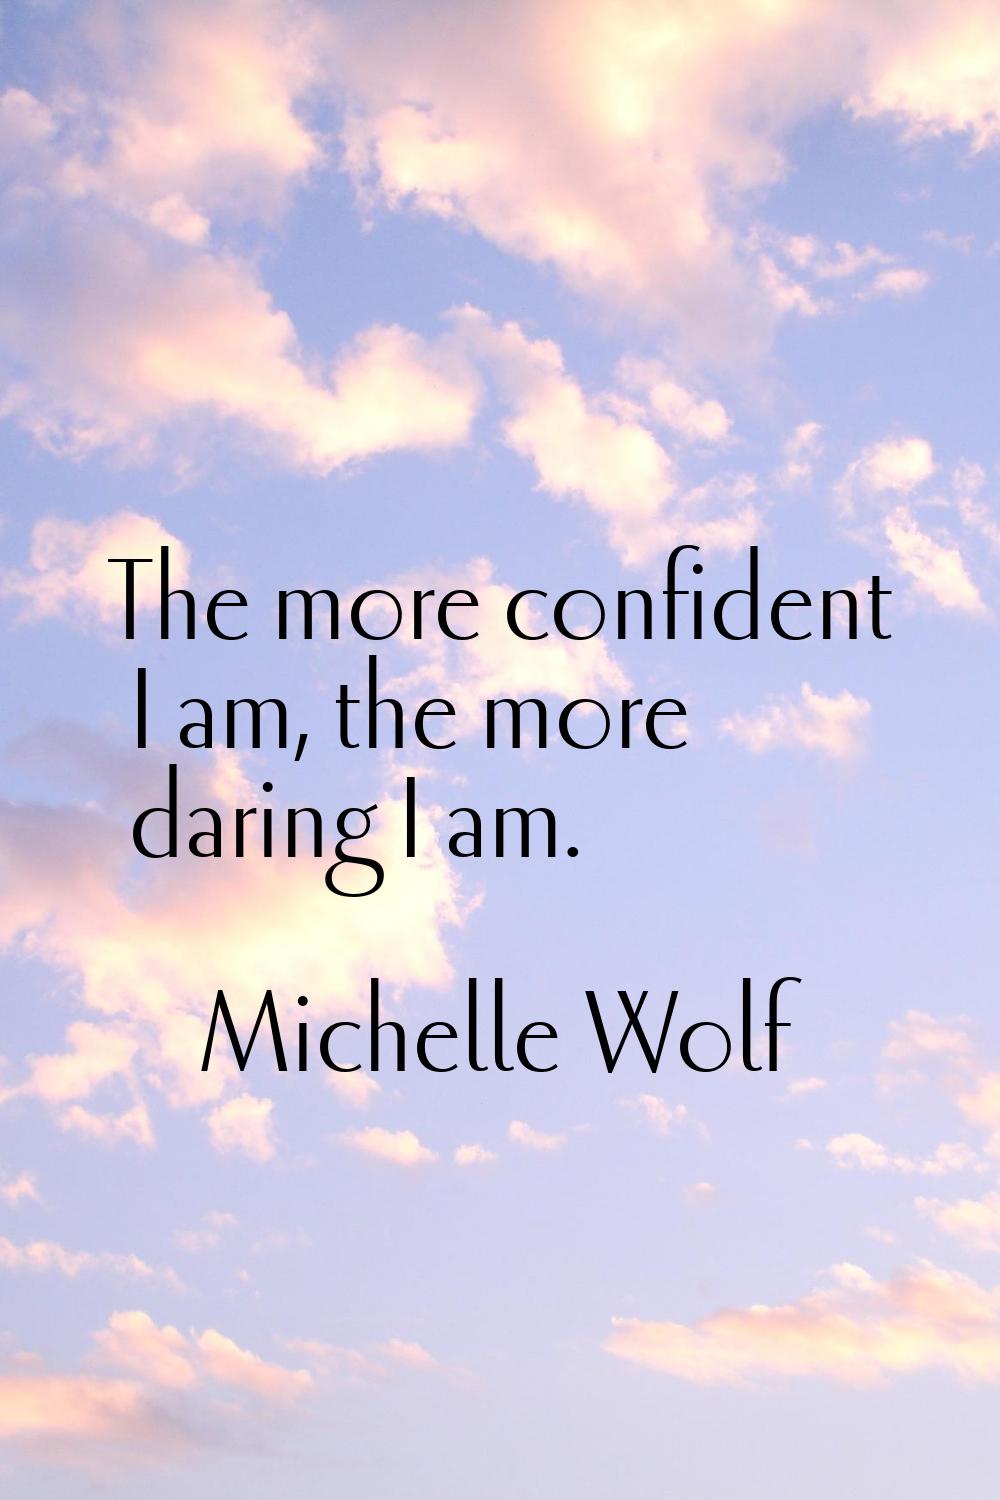 The more confident I am, the more daring I am.